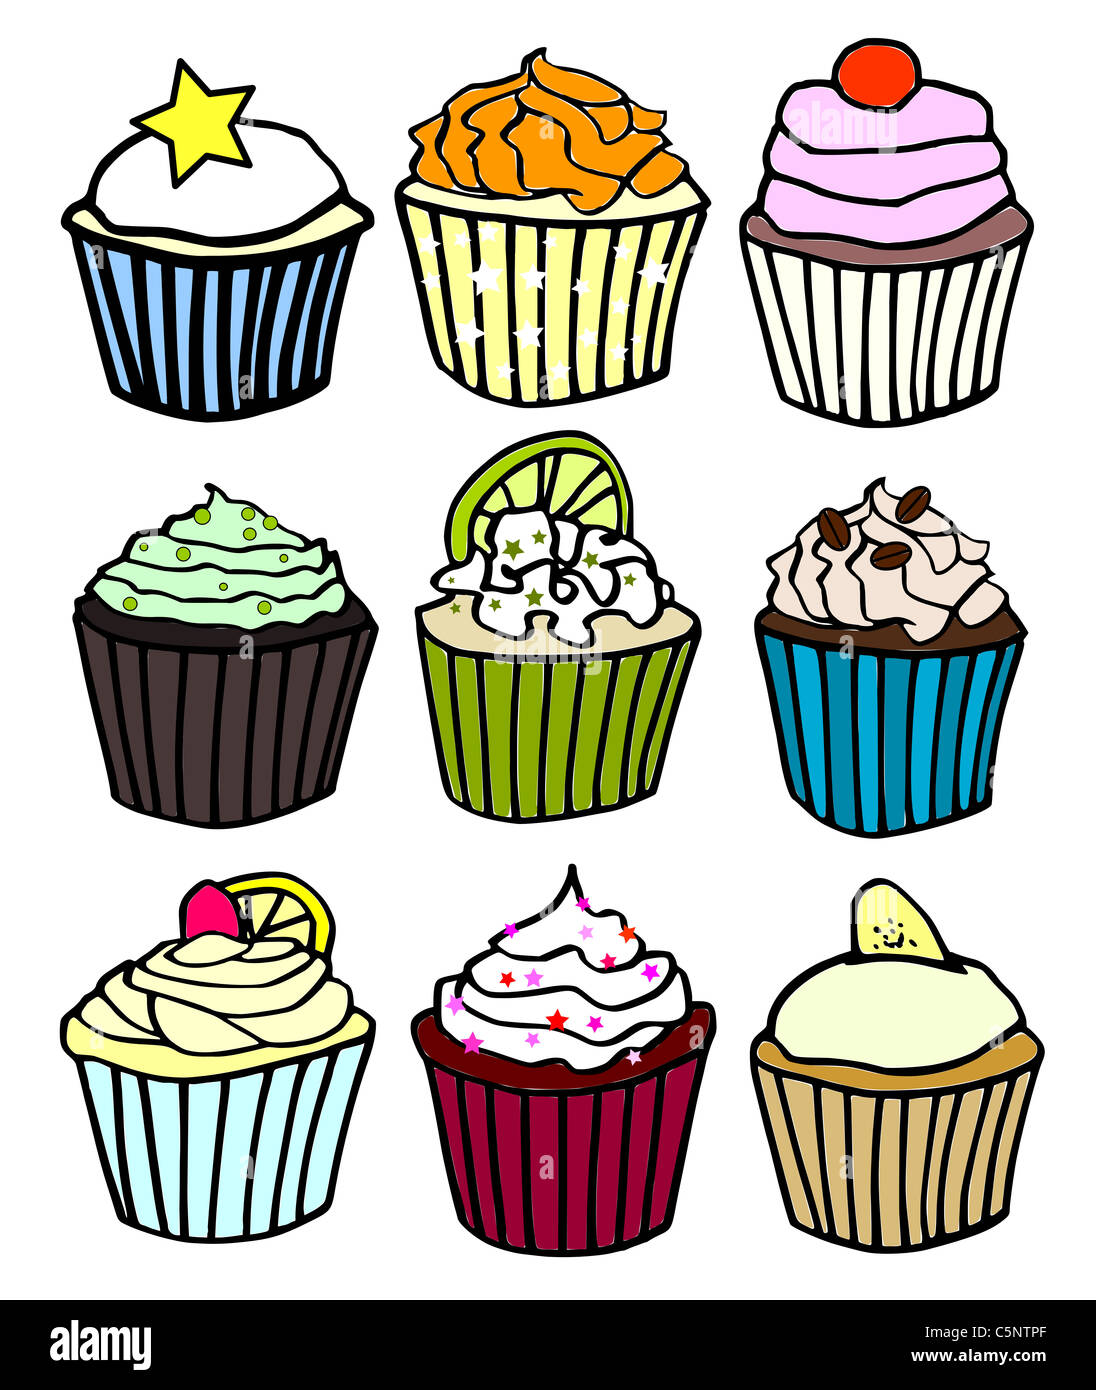 Nine homemade cupcakes for inspiration: orange, limoncello, cherry, Irish cream, key lime, espresso, banana and red velvet cupcakes. Stock Photo